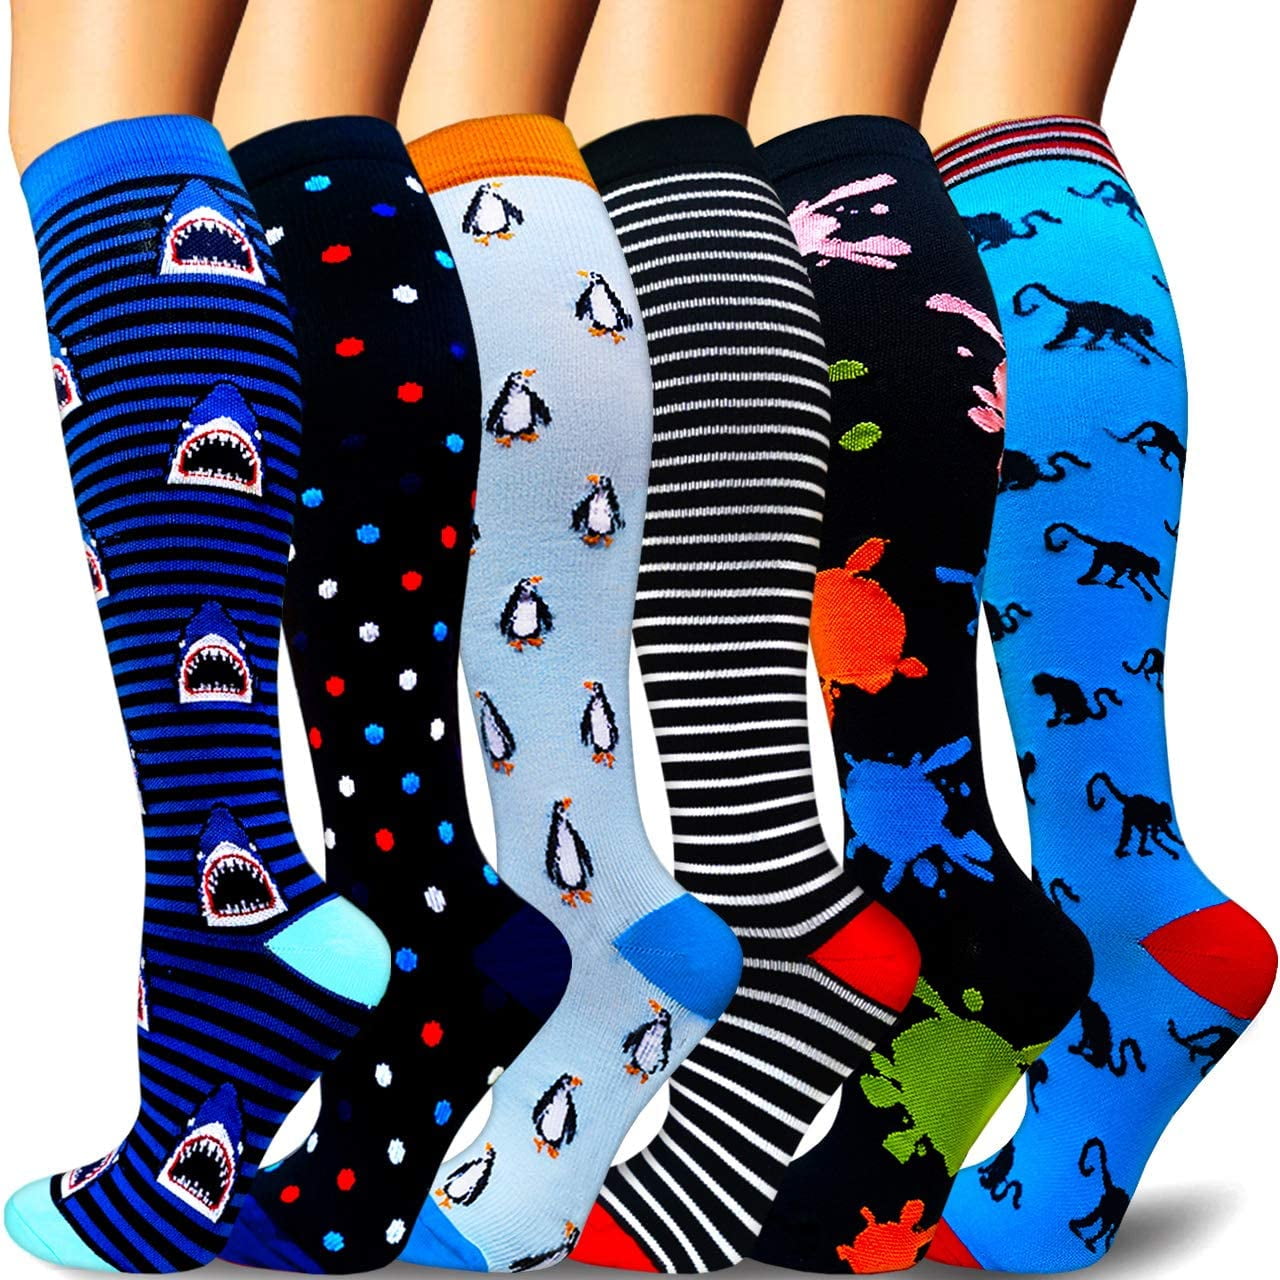 Best Medical for Running,Travel,Nurses,Flight Travel,20-30mmHg 3/7 Pairs Compression Socks For Women&Men